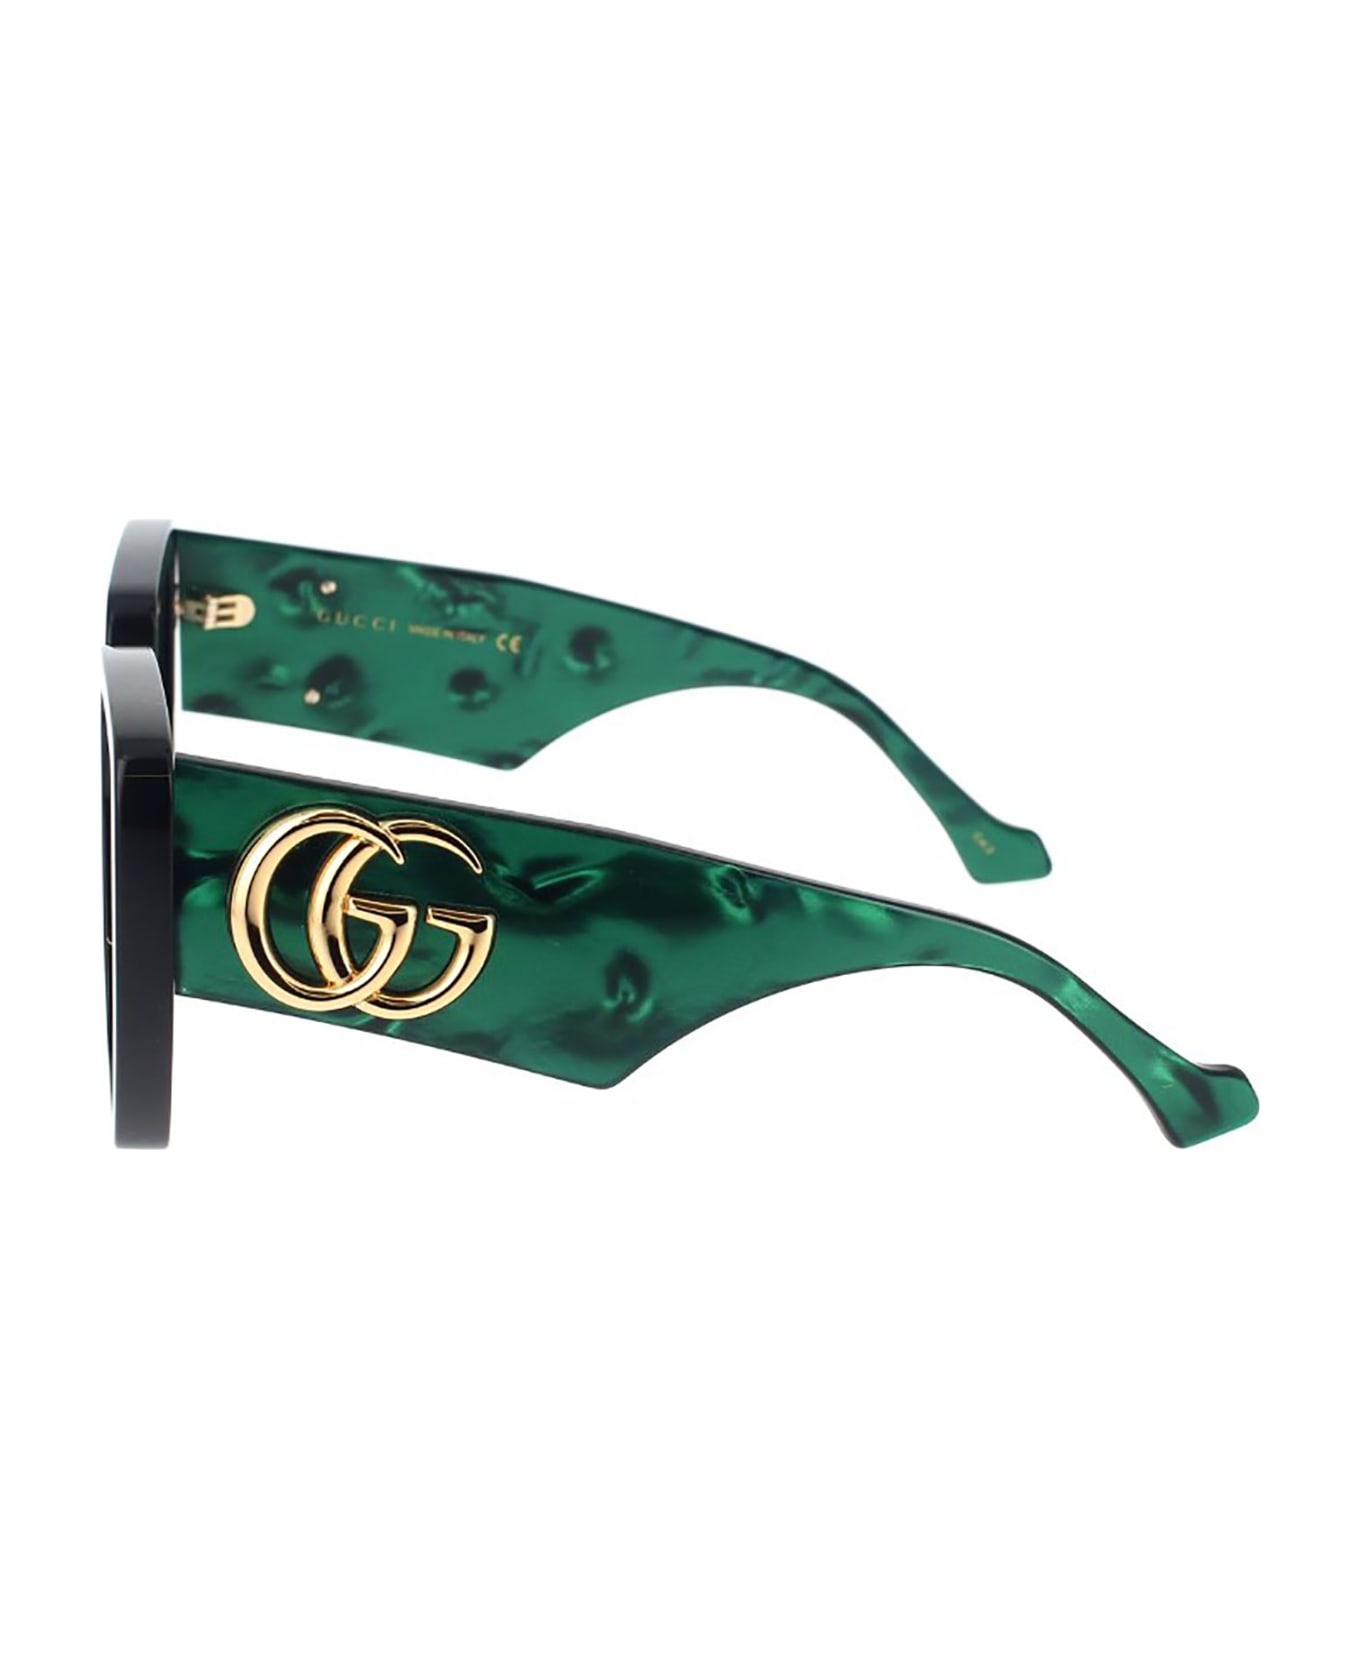 Gucci Eyewear GG0956S Sunglasses - Black Green Green